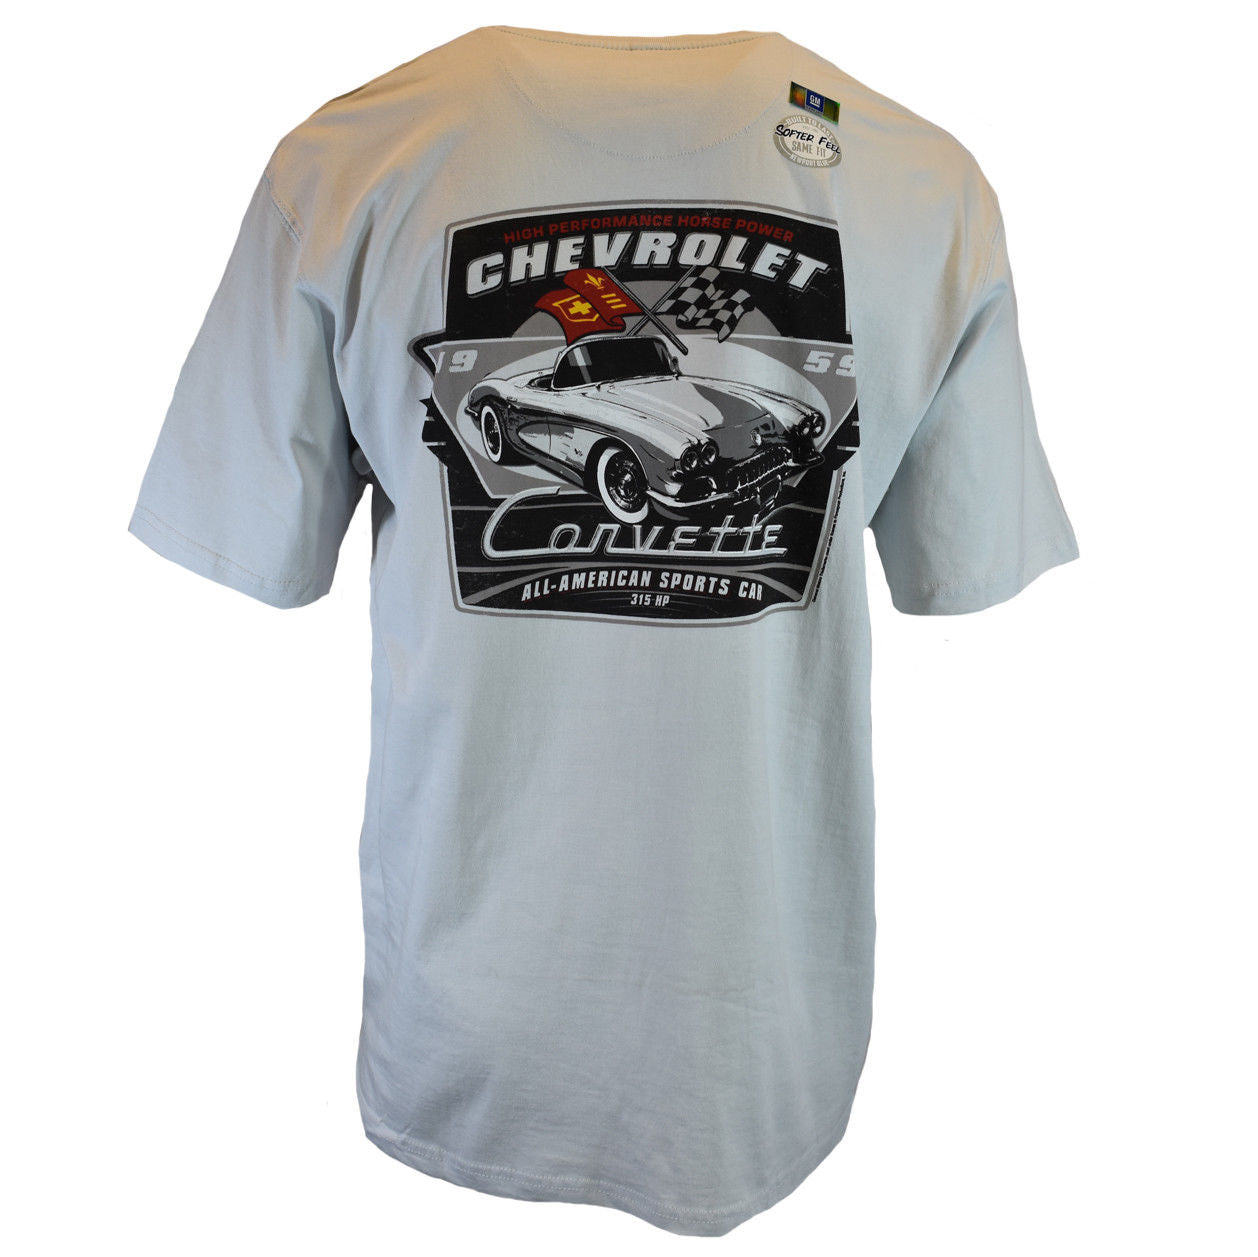 Chevrolet 1959 Corvette All-American Sports Car Men's Graphic T-Shirt